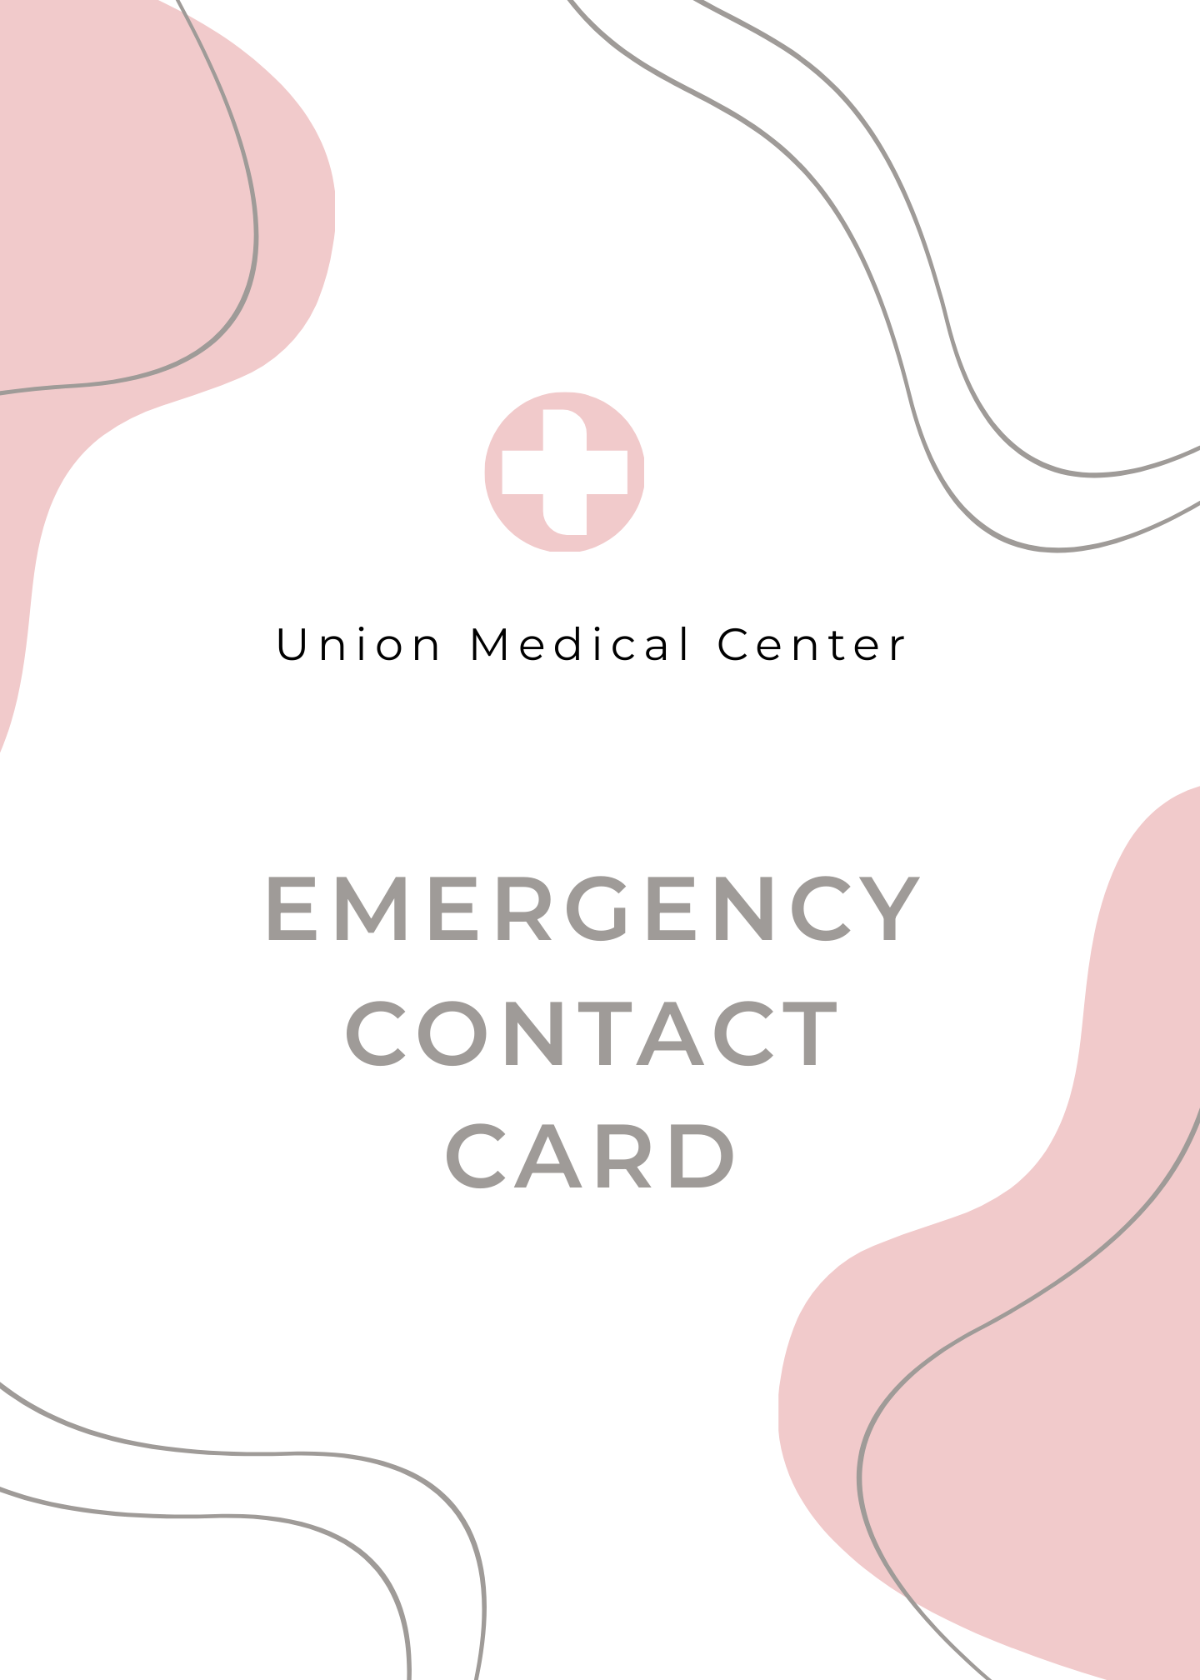 Emergency Card Template